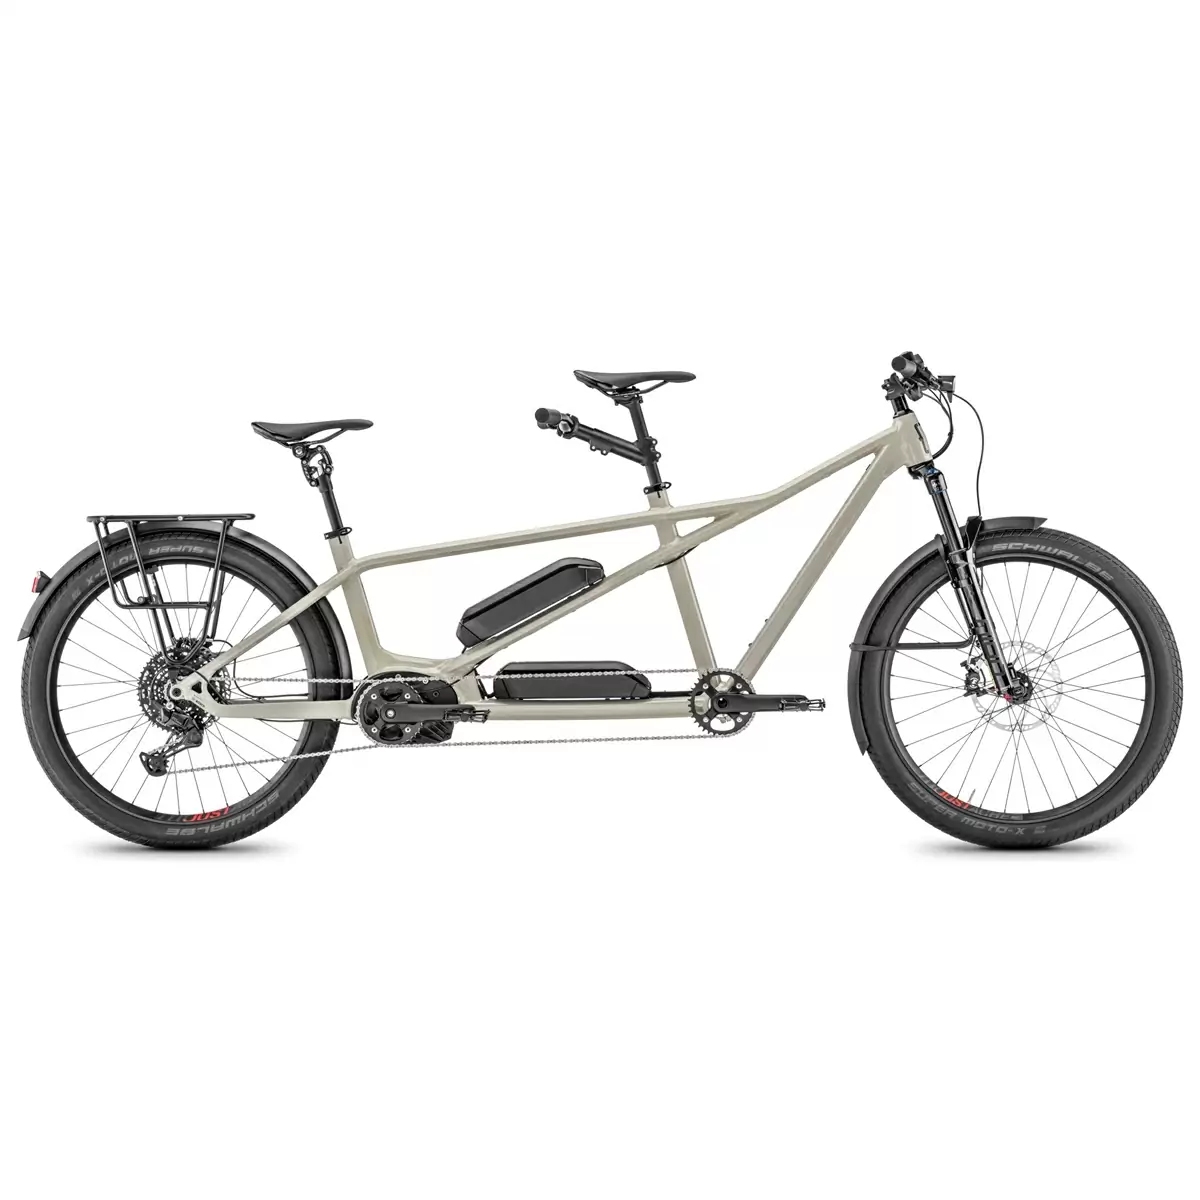 Tandem E-bike Samedi 27 X2 TRK 27.5 140mm 11v 545+545Wh Bosch Performance Line CX Smart Size M/L - image